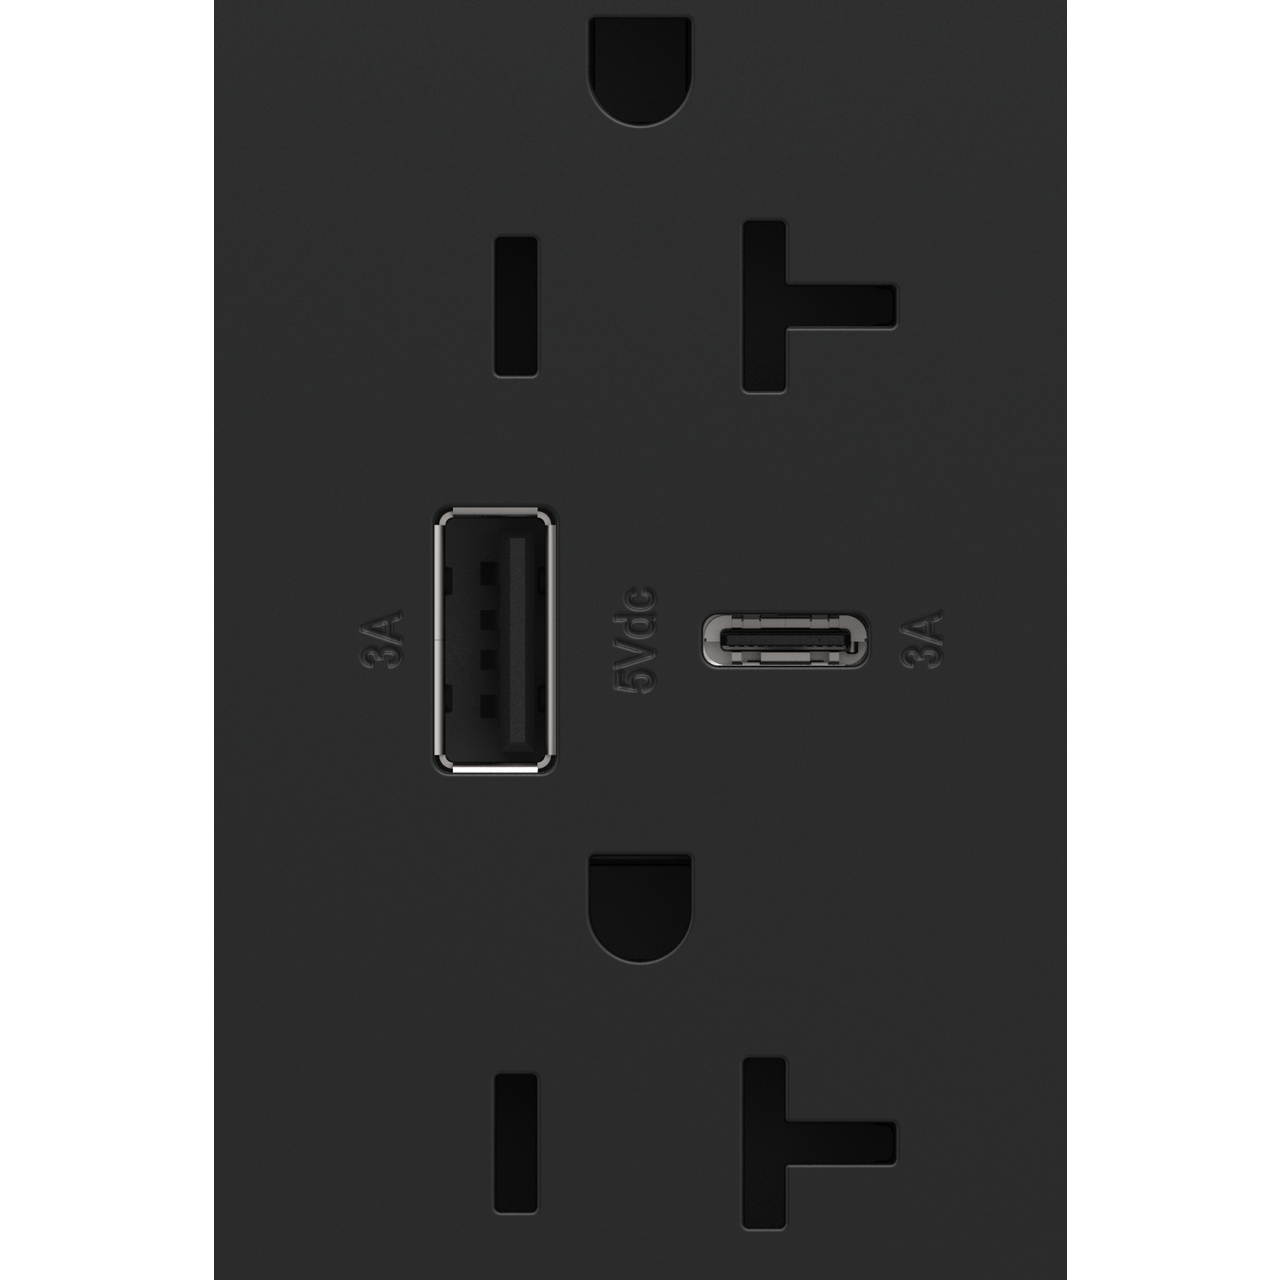 Adorne 20A Tamper-Resistant Ultra-Fast USB Type A/C Outlet